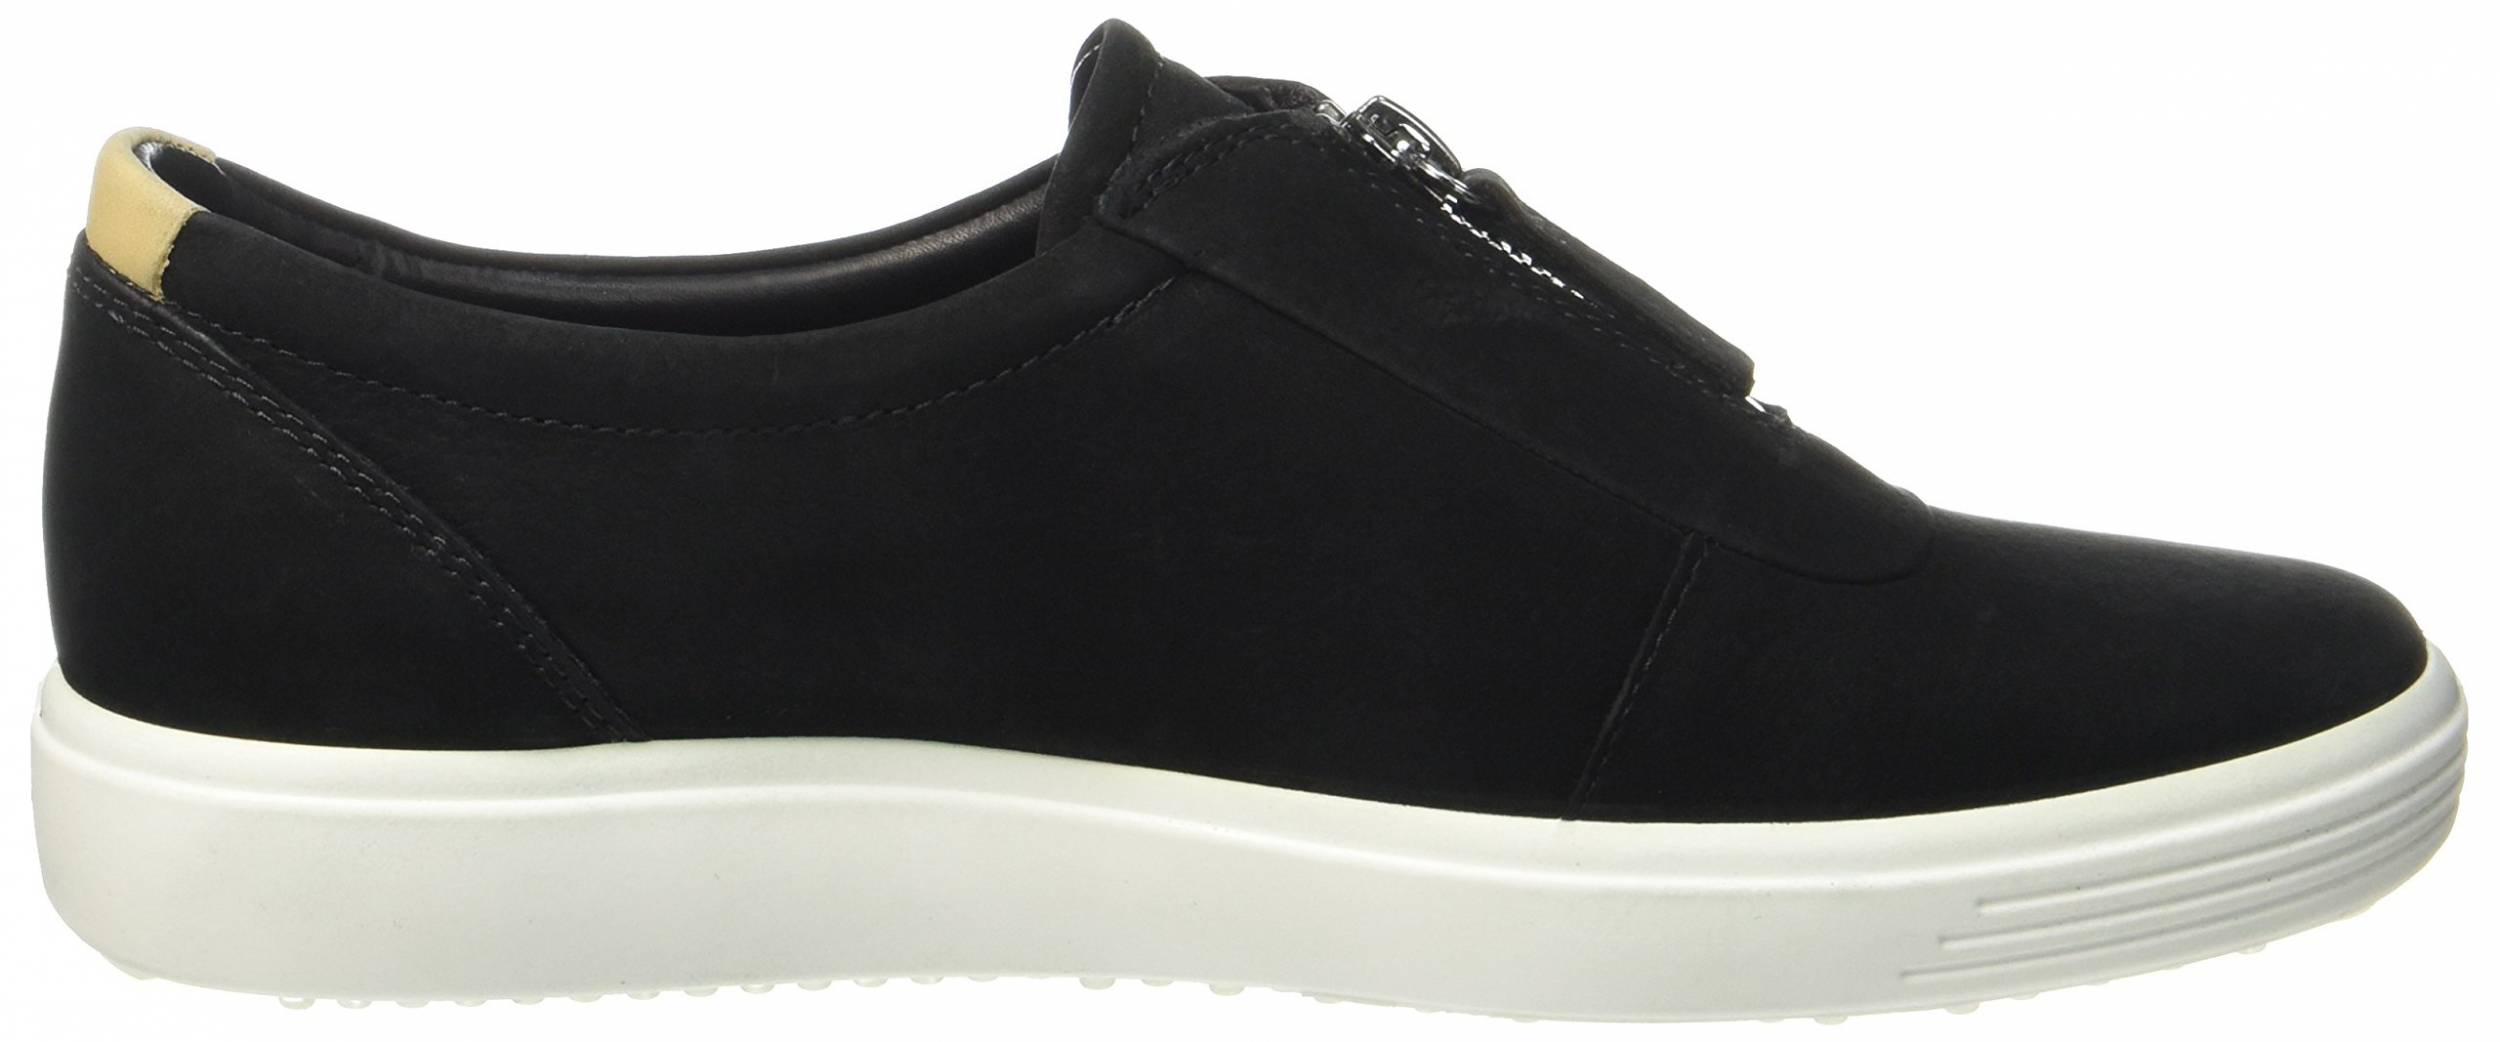 Ecco Soft 7 Zip sneakers in black (only 